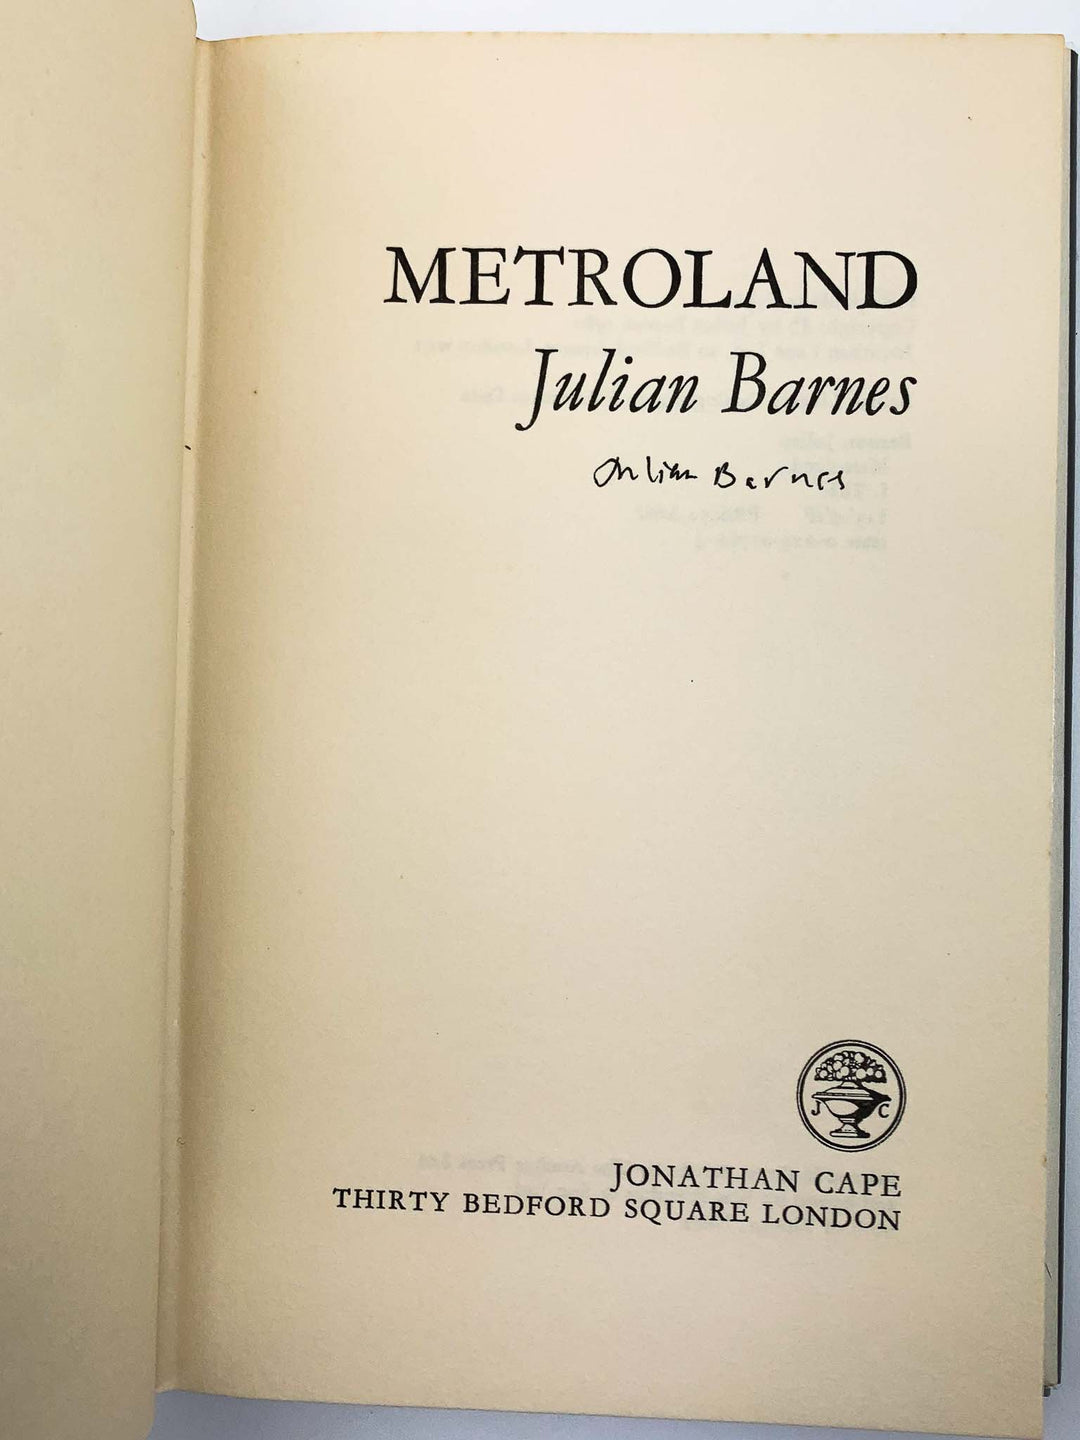 Barnes, Julian - Metroland - SIGNED | image4